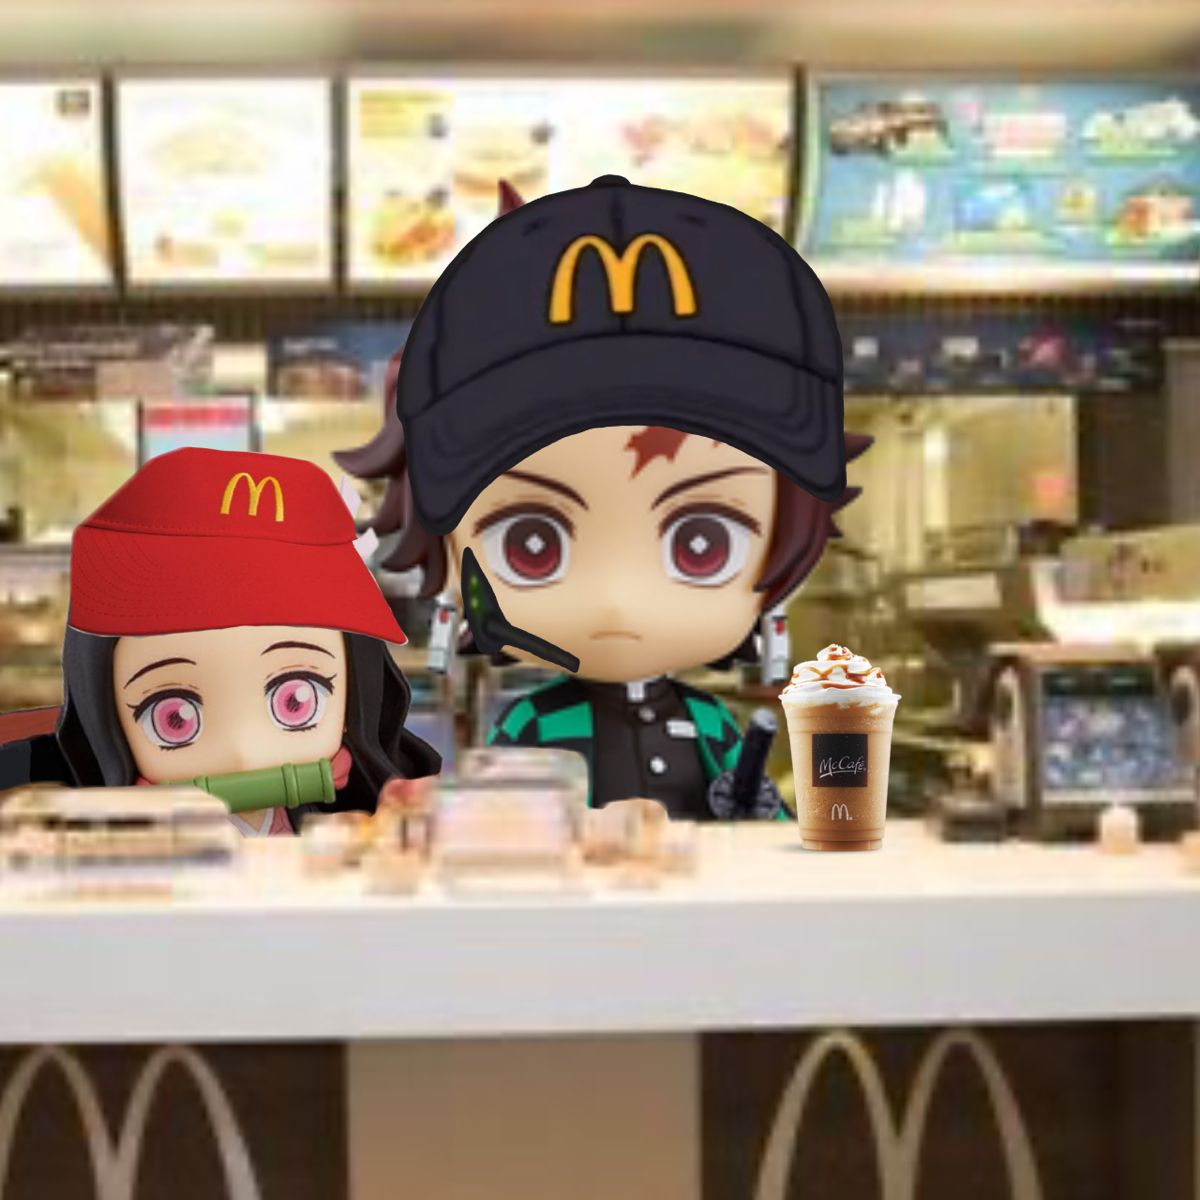 Tanjiro McDonald’s Nendoroid